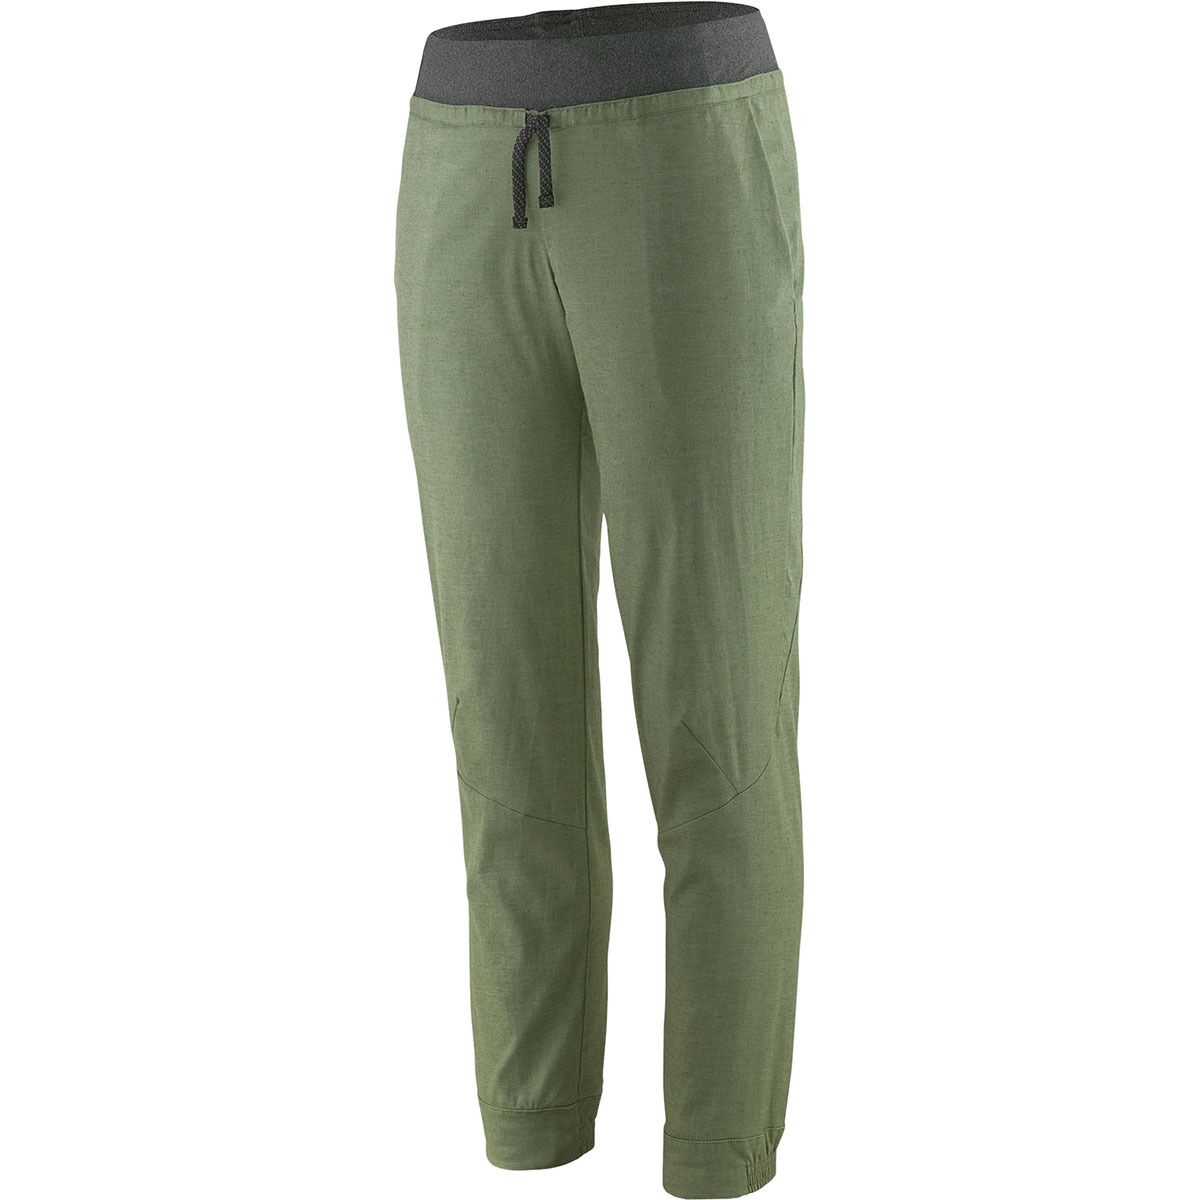 Patagonia Hampi Rock Pants - Climbing trousers Women's, Buy online